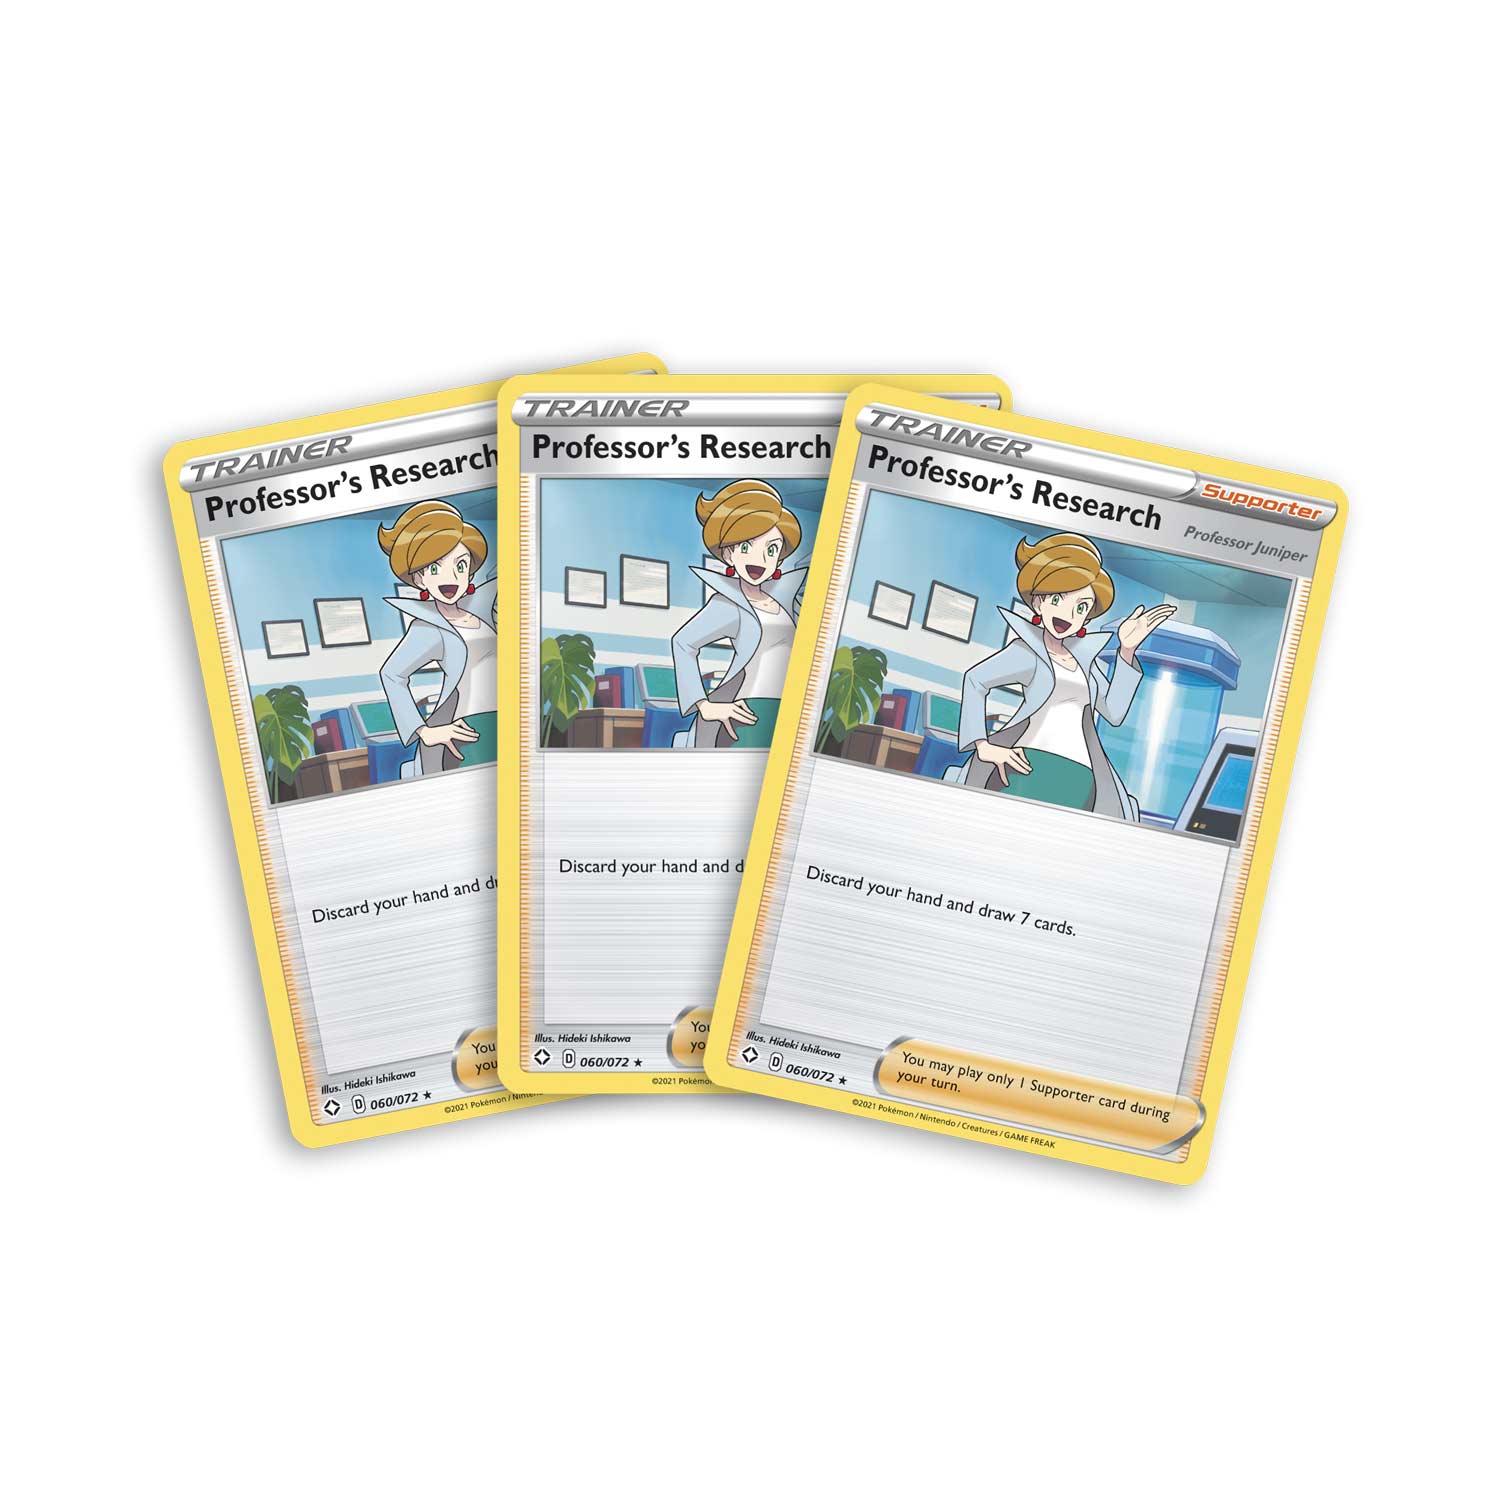 Pokemon Trading Card Game Professor Juniper Premium Tournament Collection